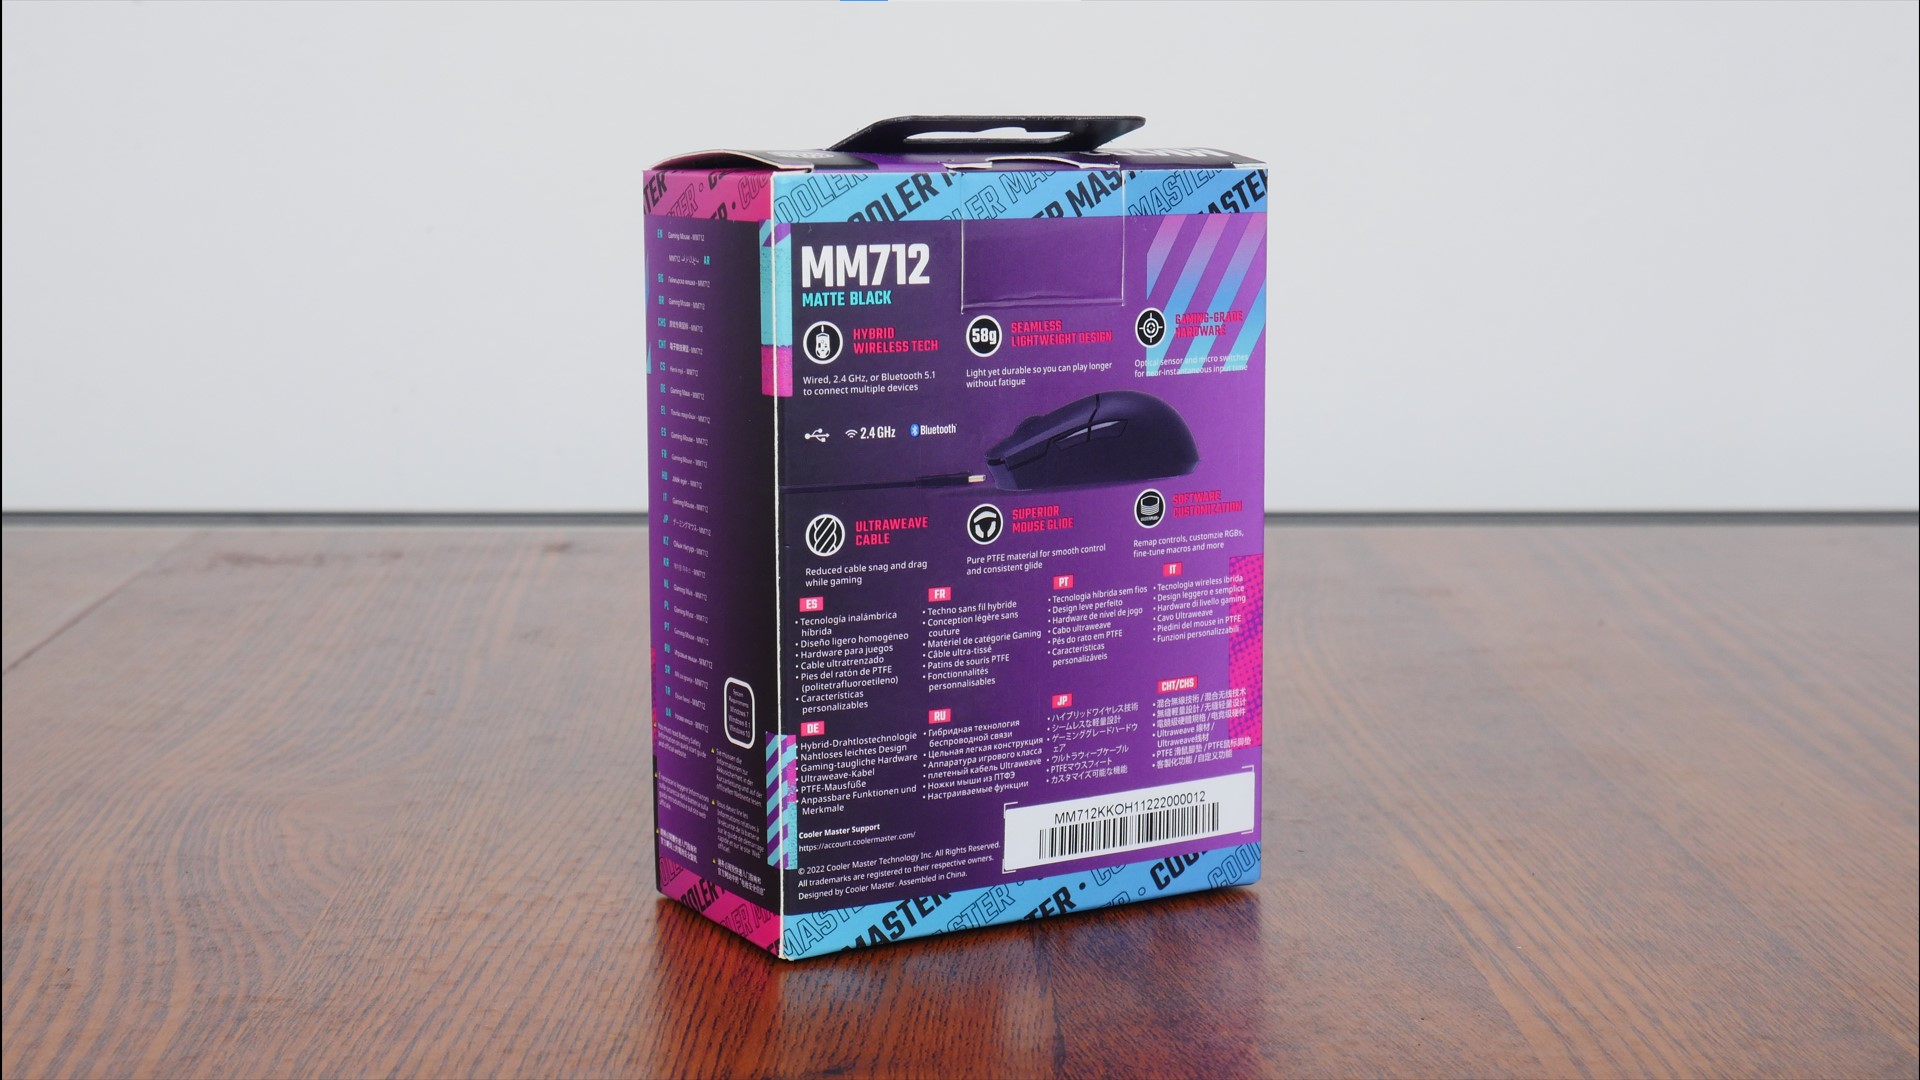 Cooler Master MM712 Packaging (Rear)